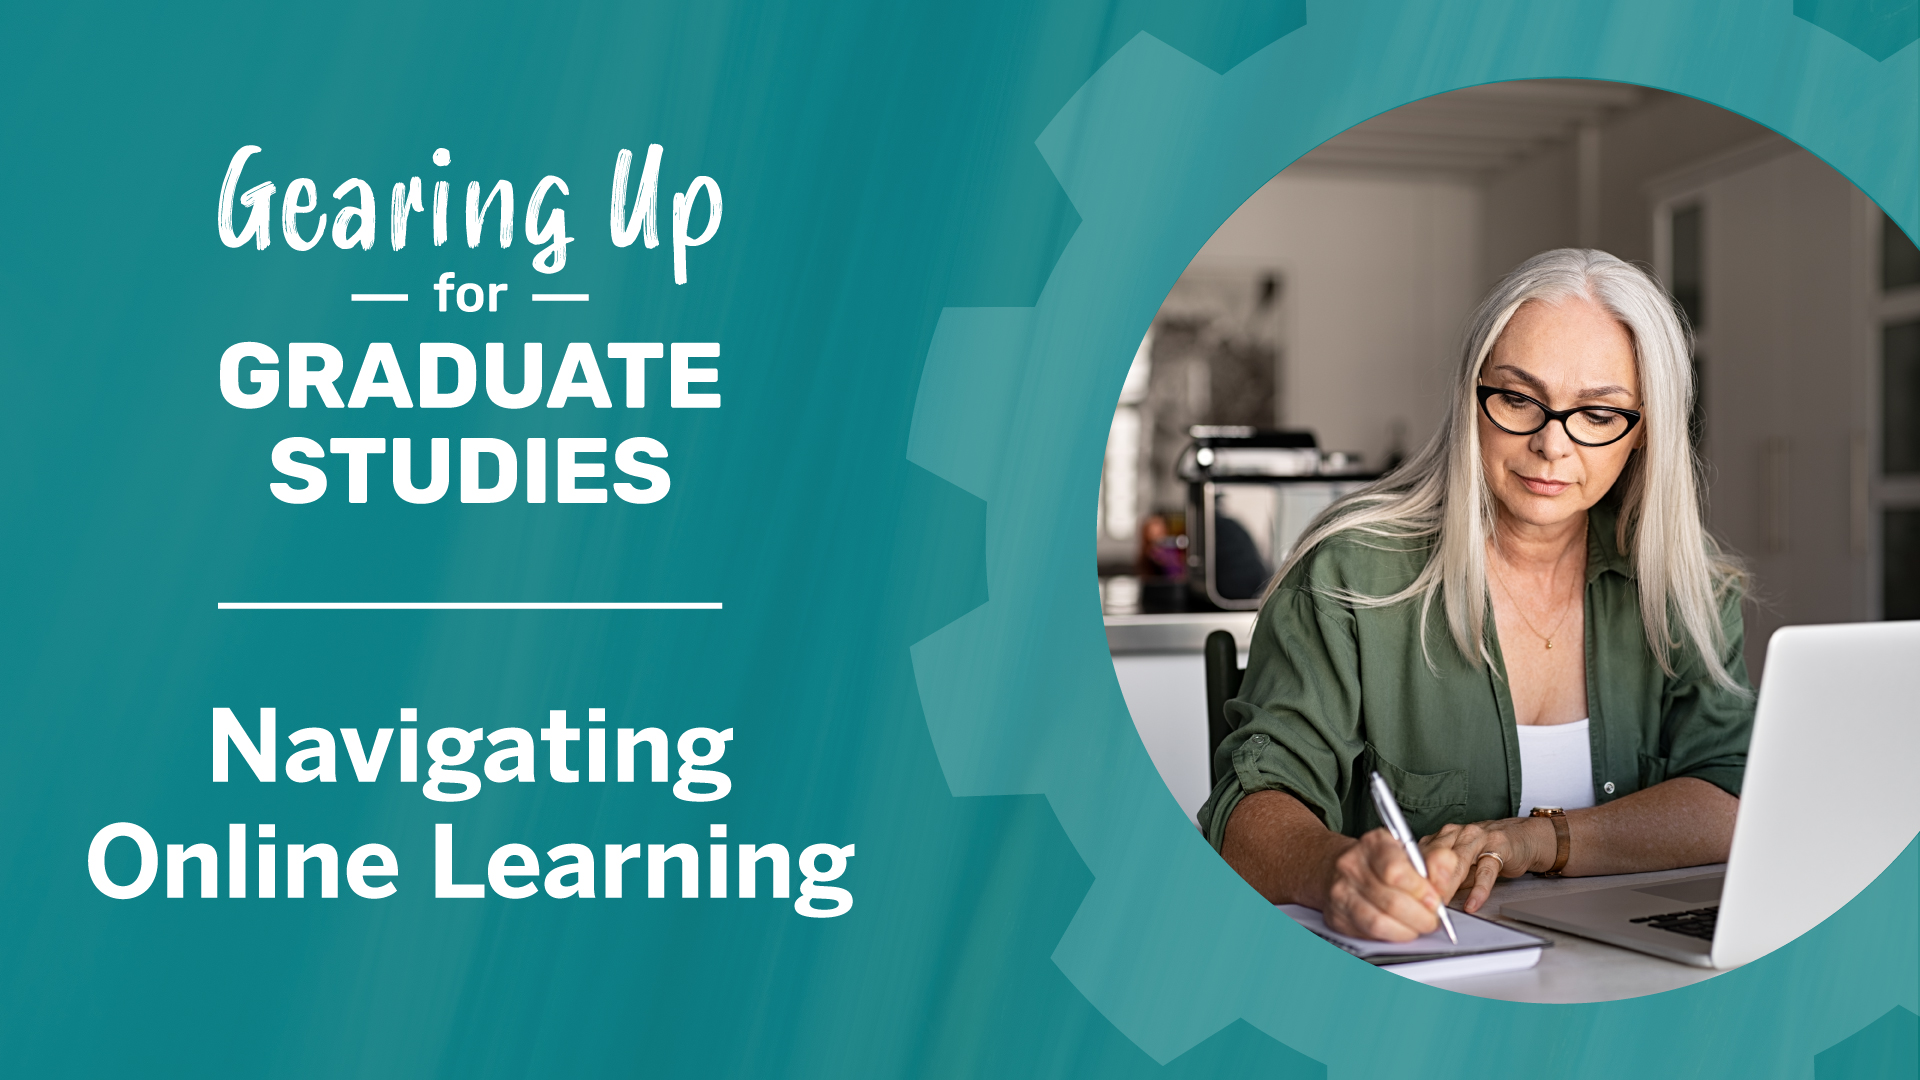 gearing up for grad studies - navigating online learning